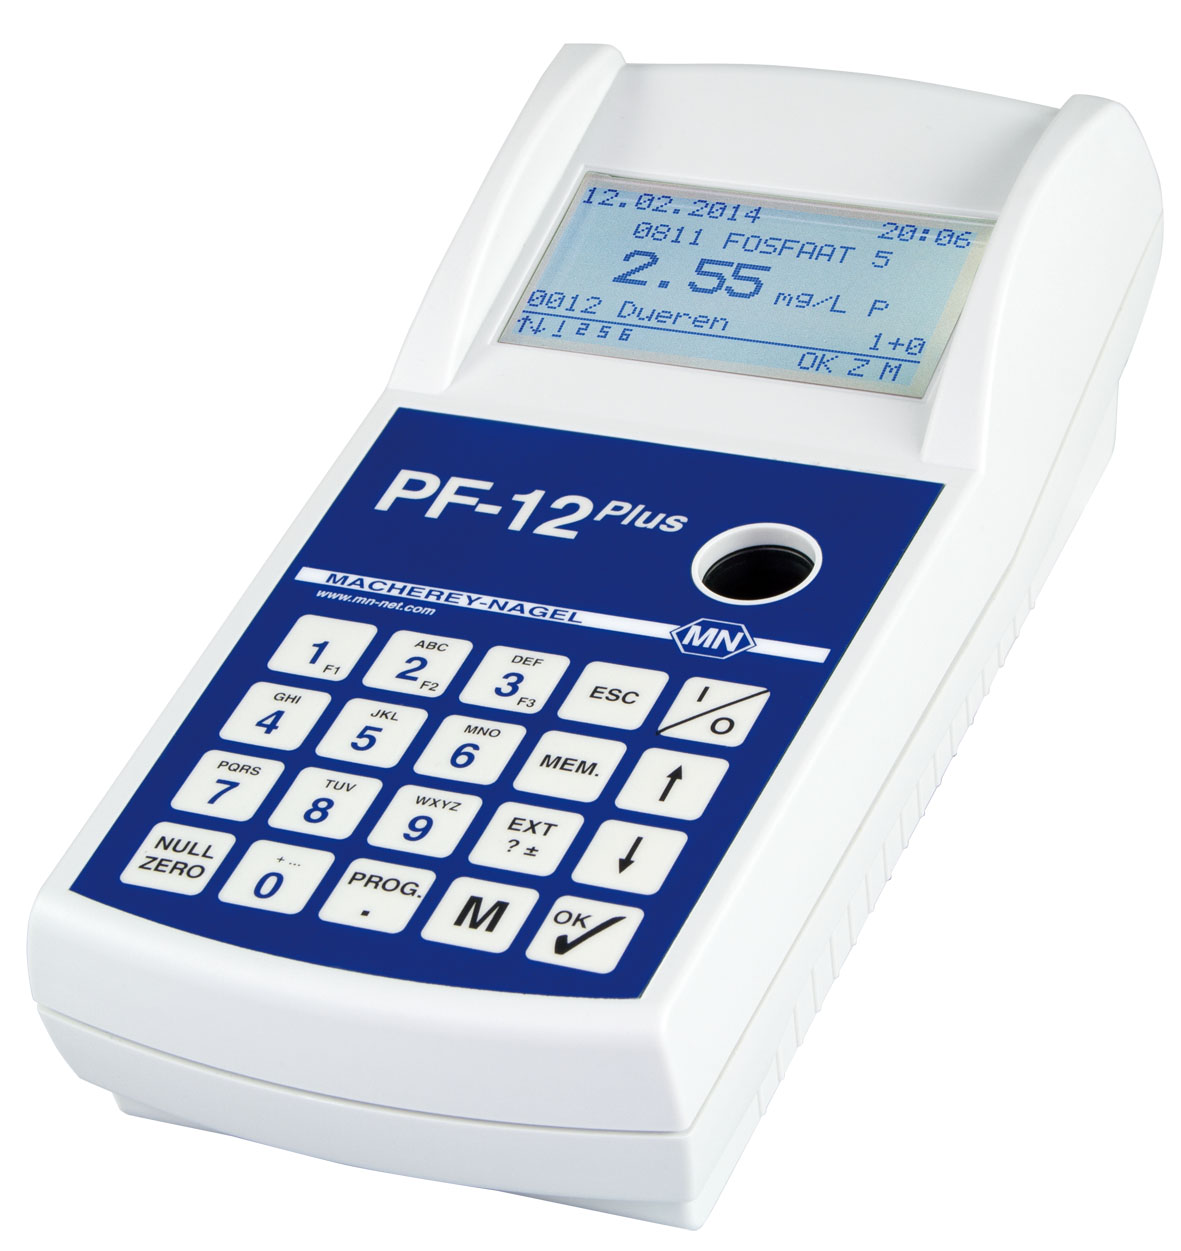 pf-12plus多参数水质分析仪